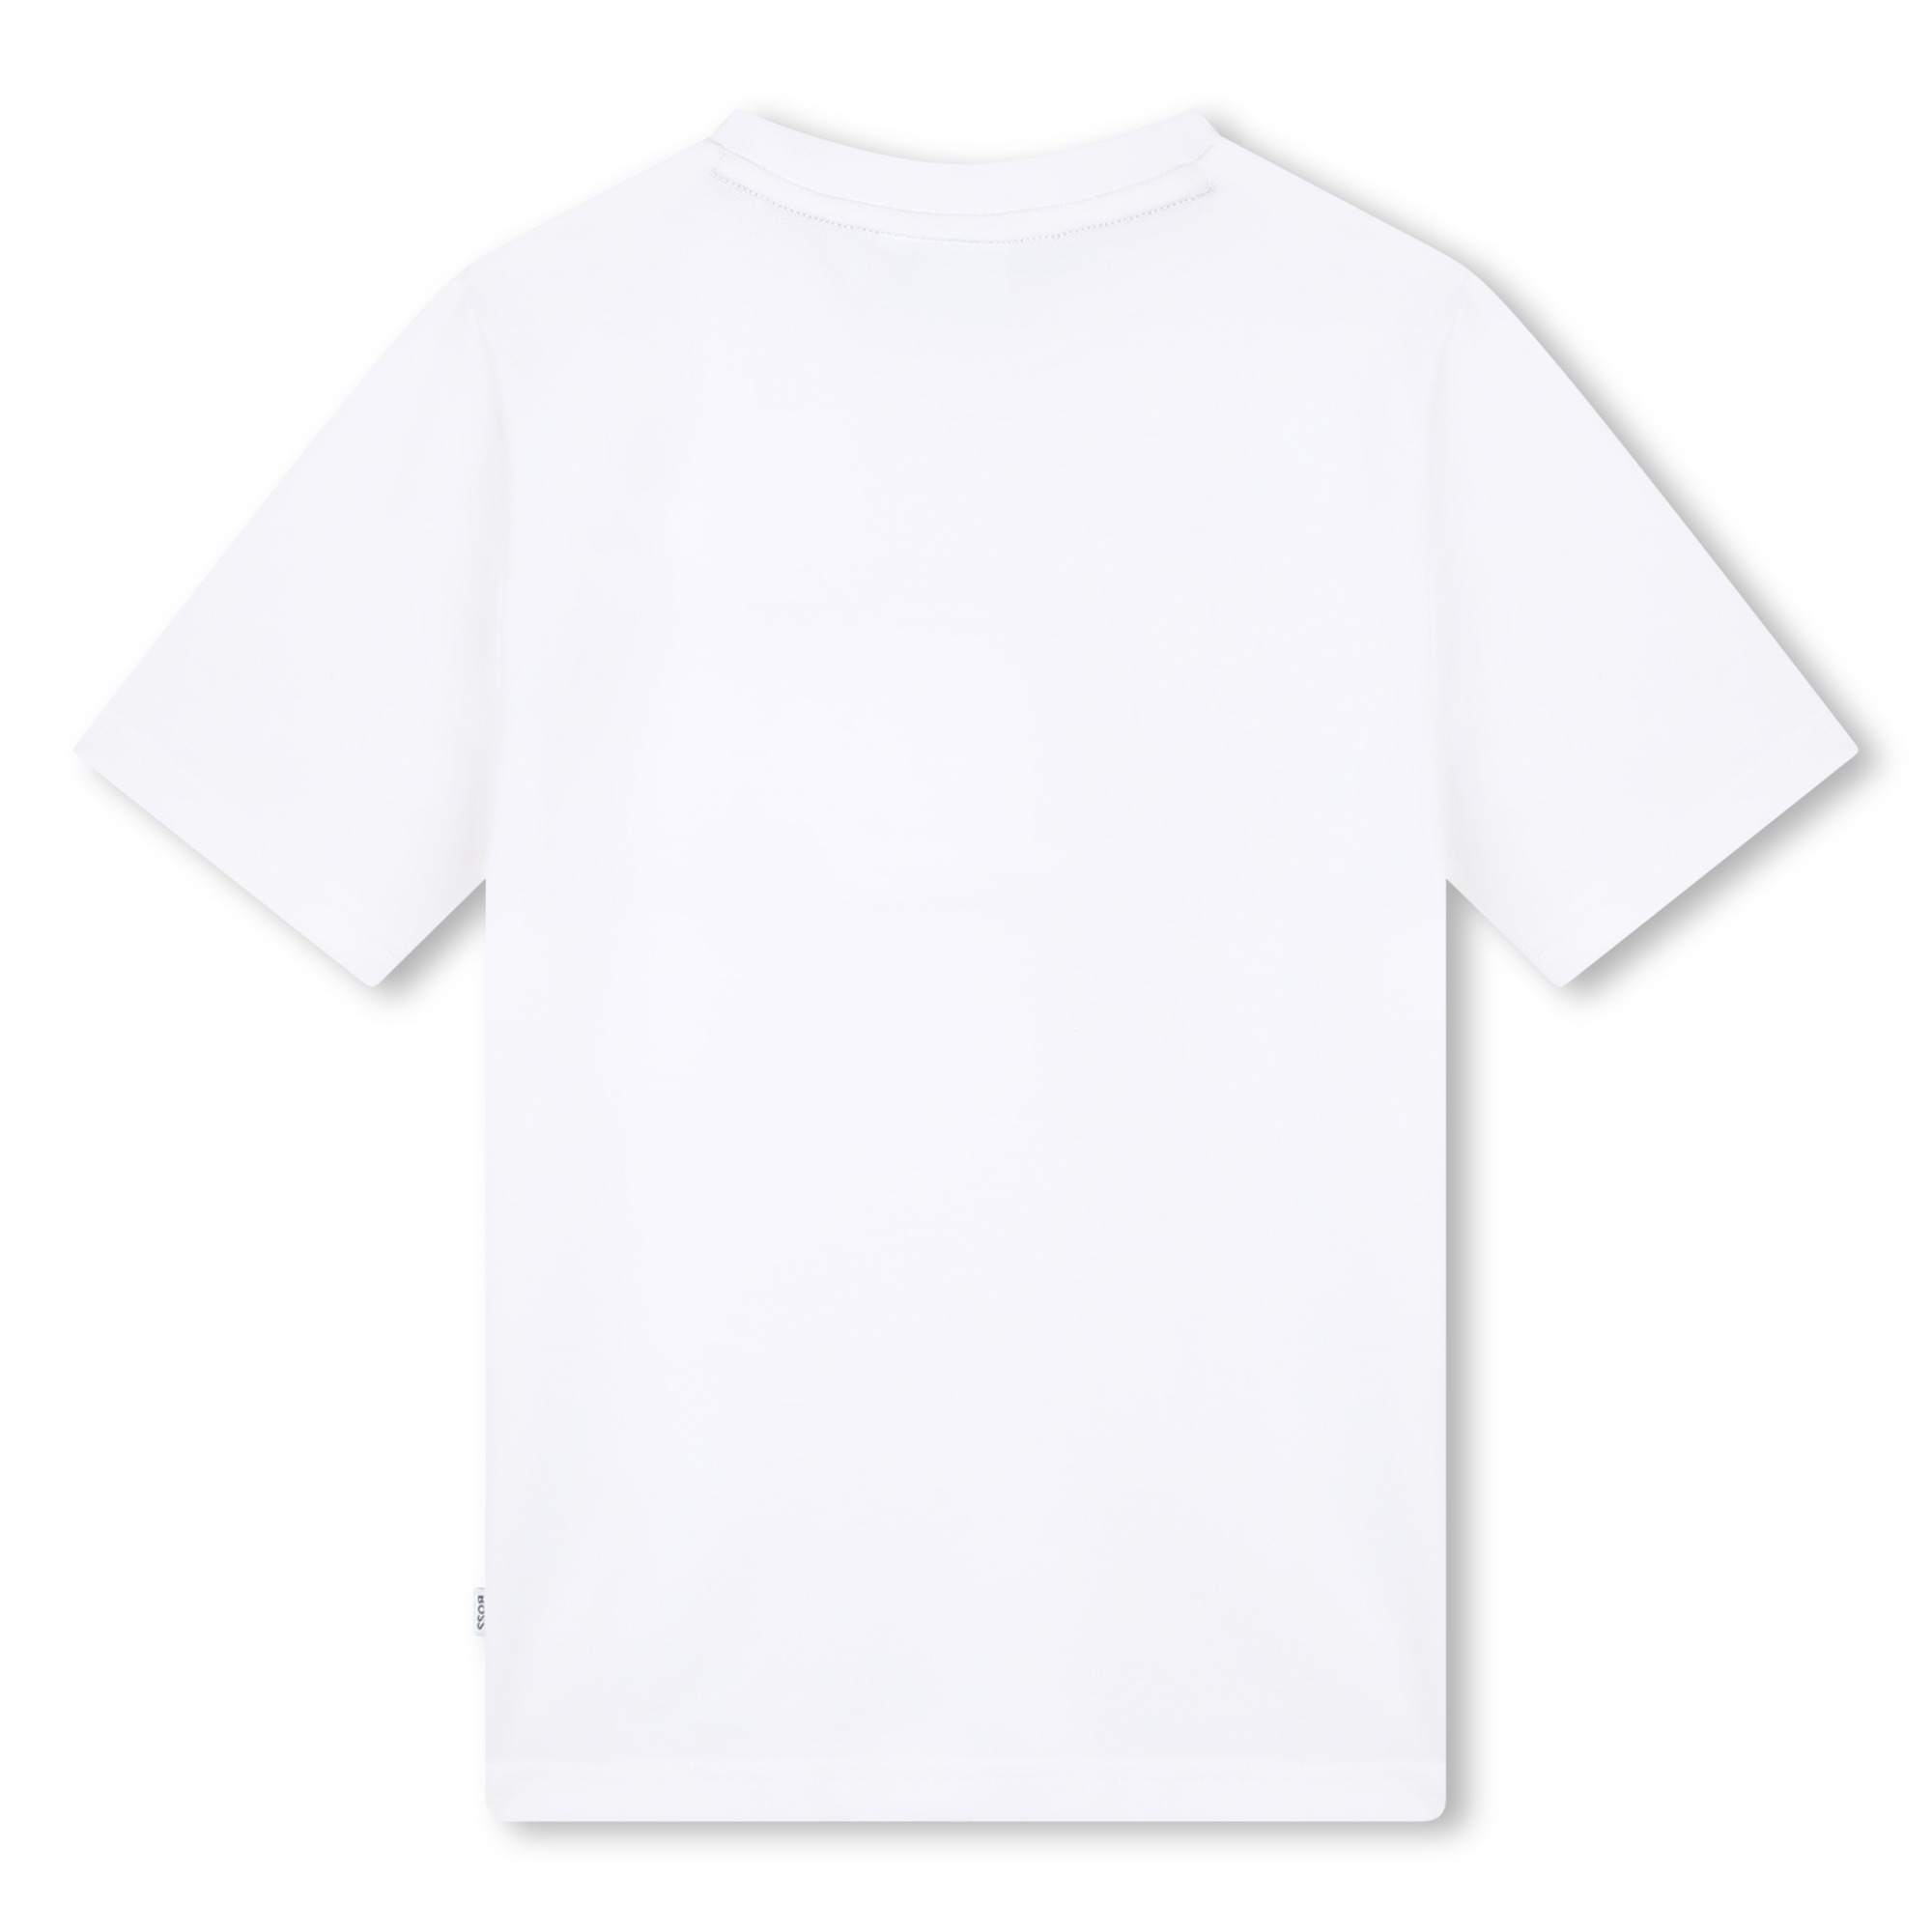 Short-sleeved T-shirt BOSS for BOY